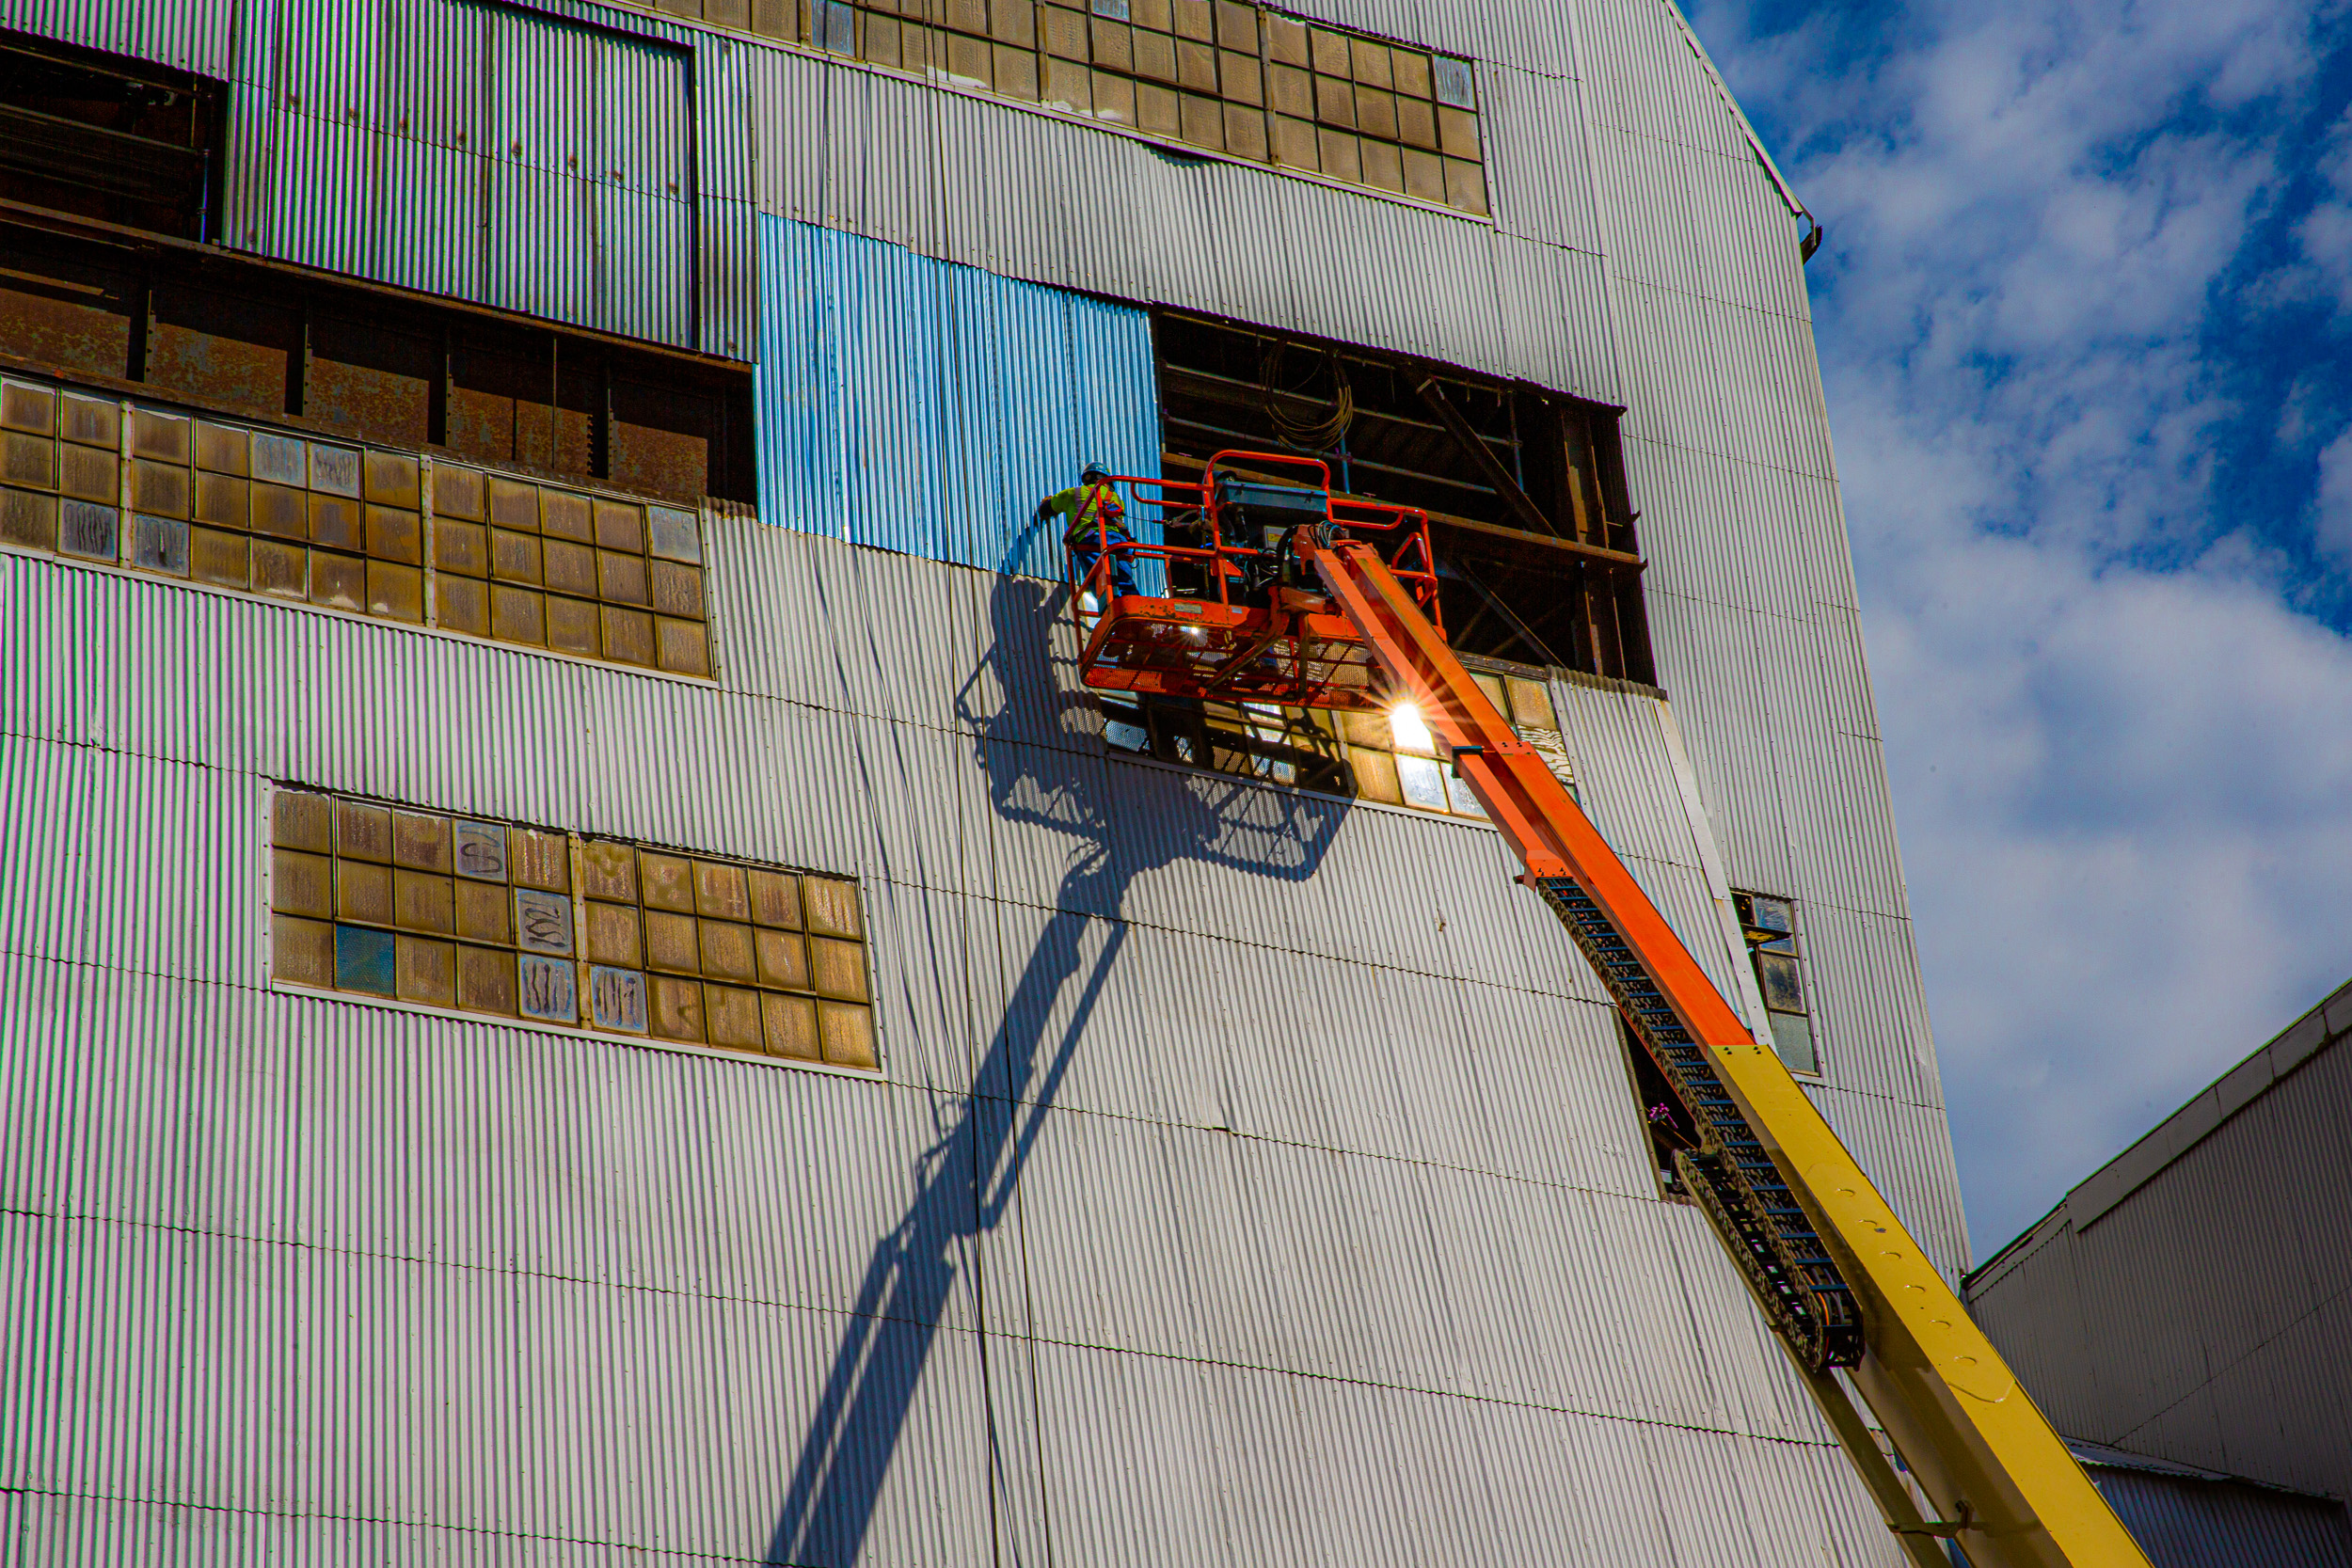 Crews do work on a headframe from an elevated platform